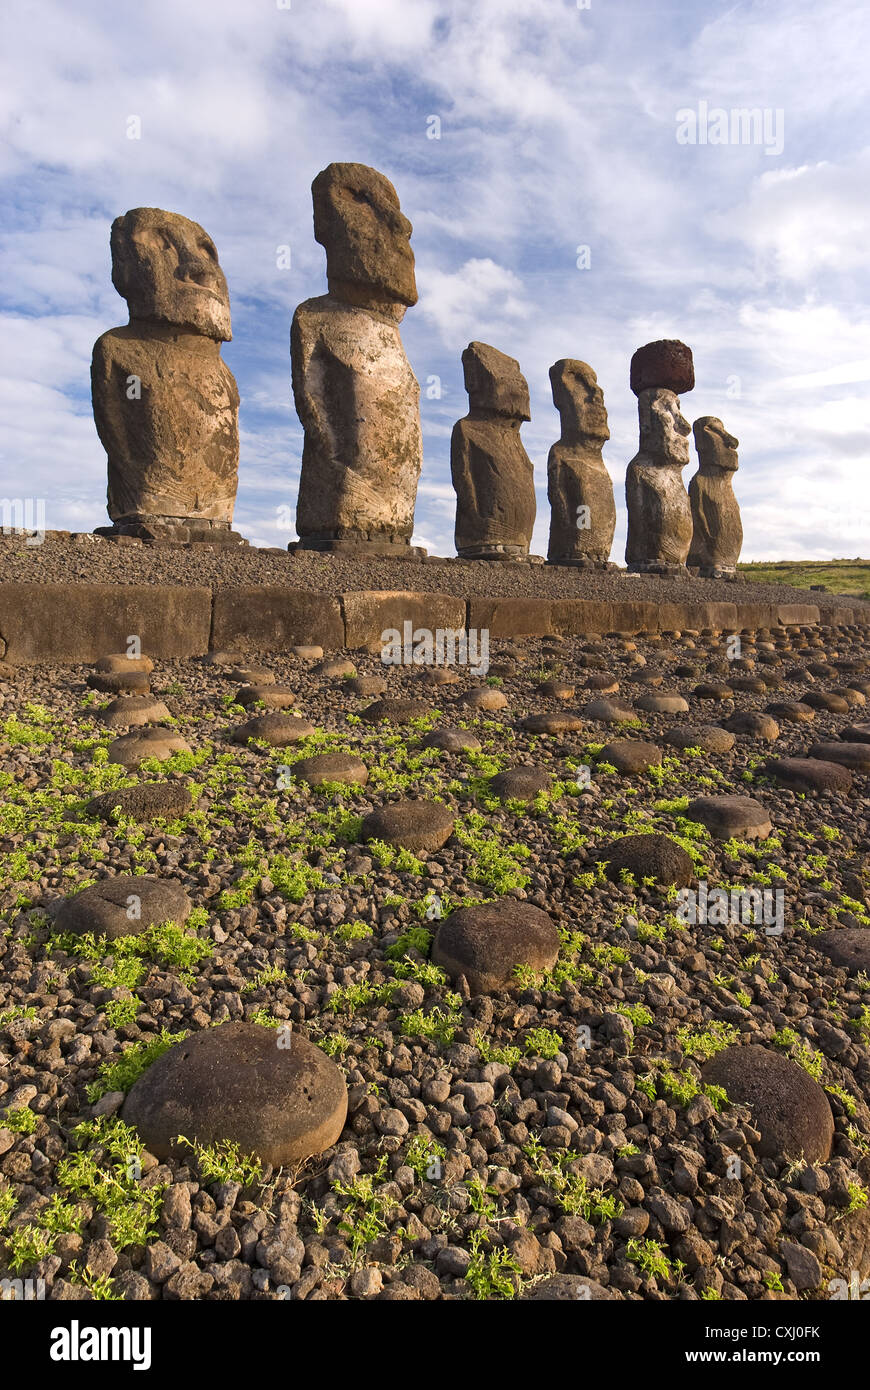 Elk198-5359v Cile, Isola di Pasqua, Ahu Tongariki, moai ststues Foto Stock